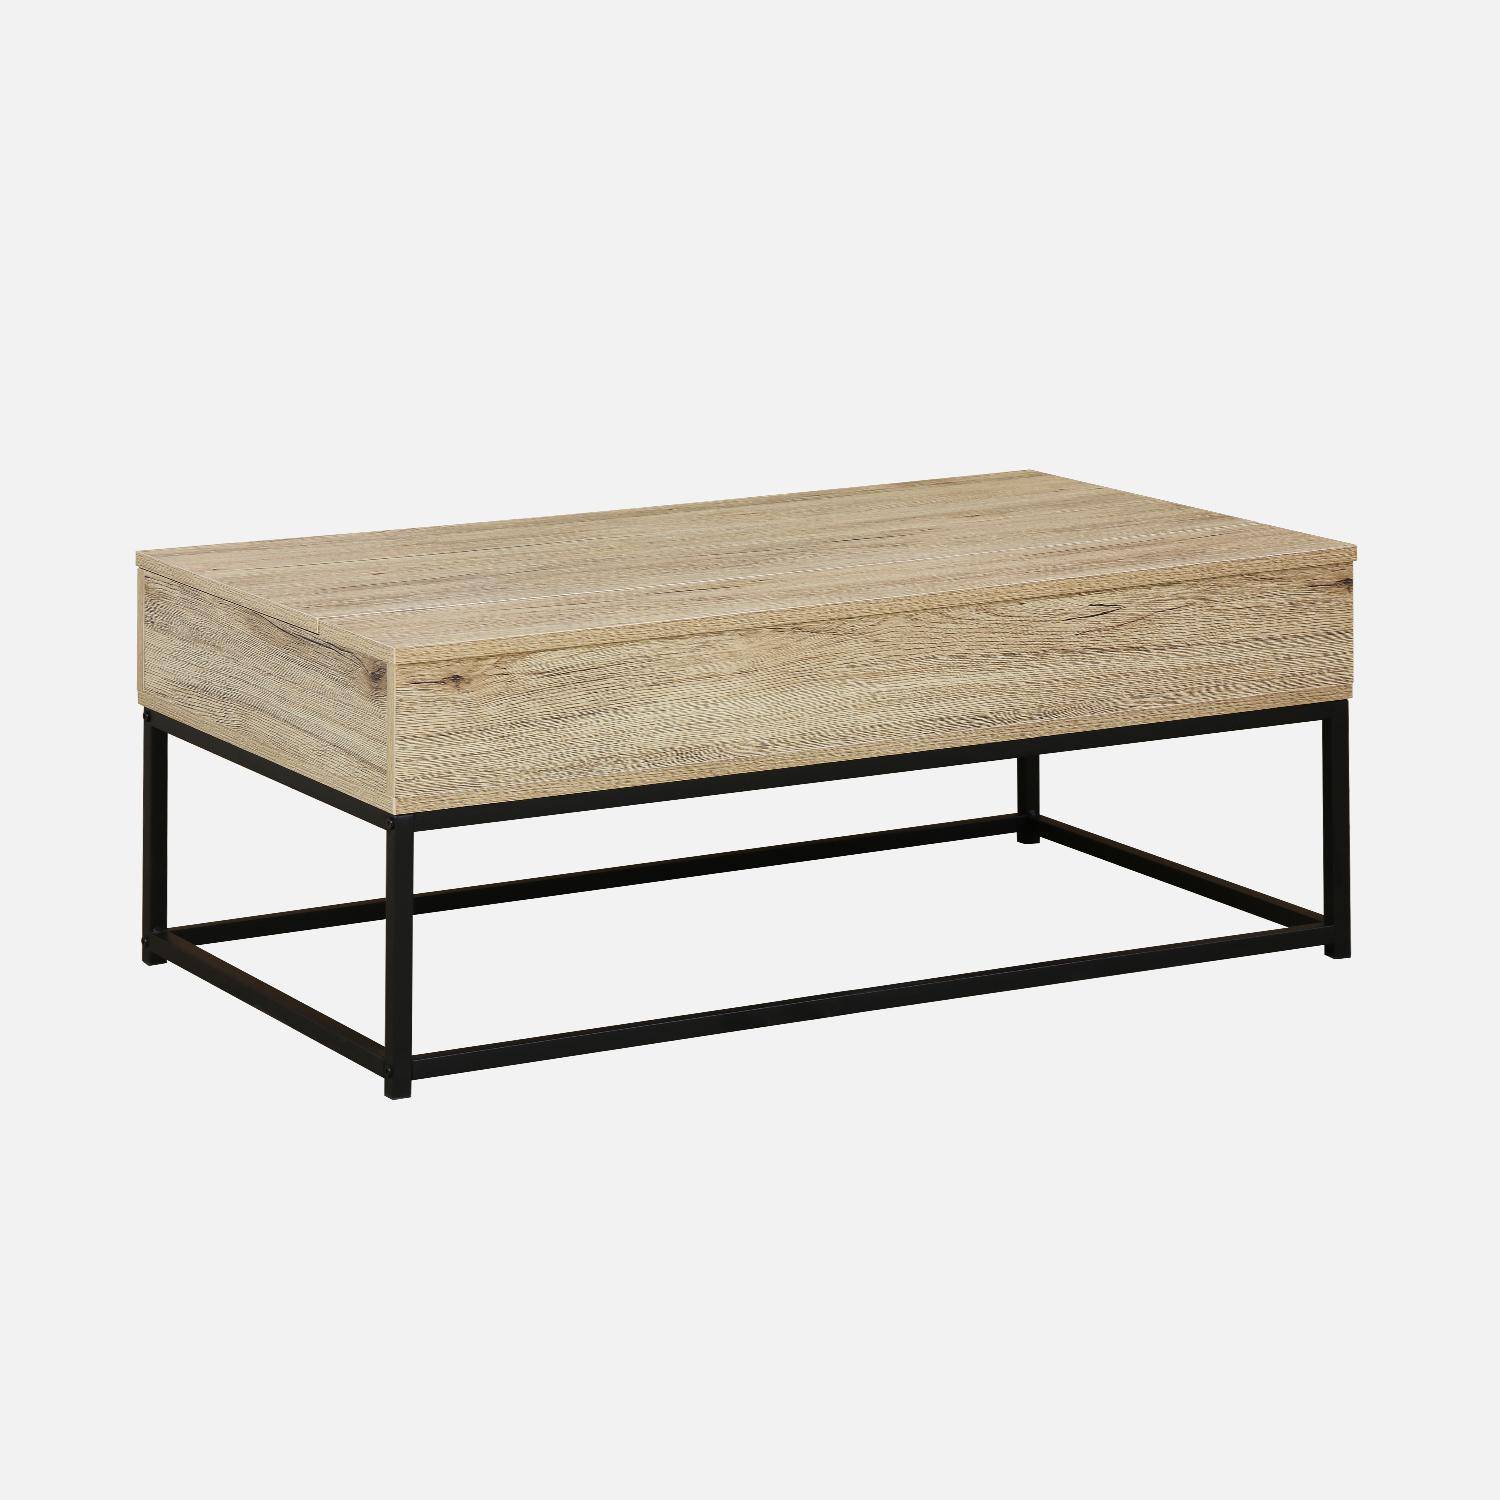 Liftable coffee table, 100x55x40.5cm - Loft,sweeek,Photo4